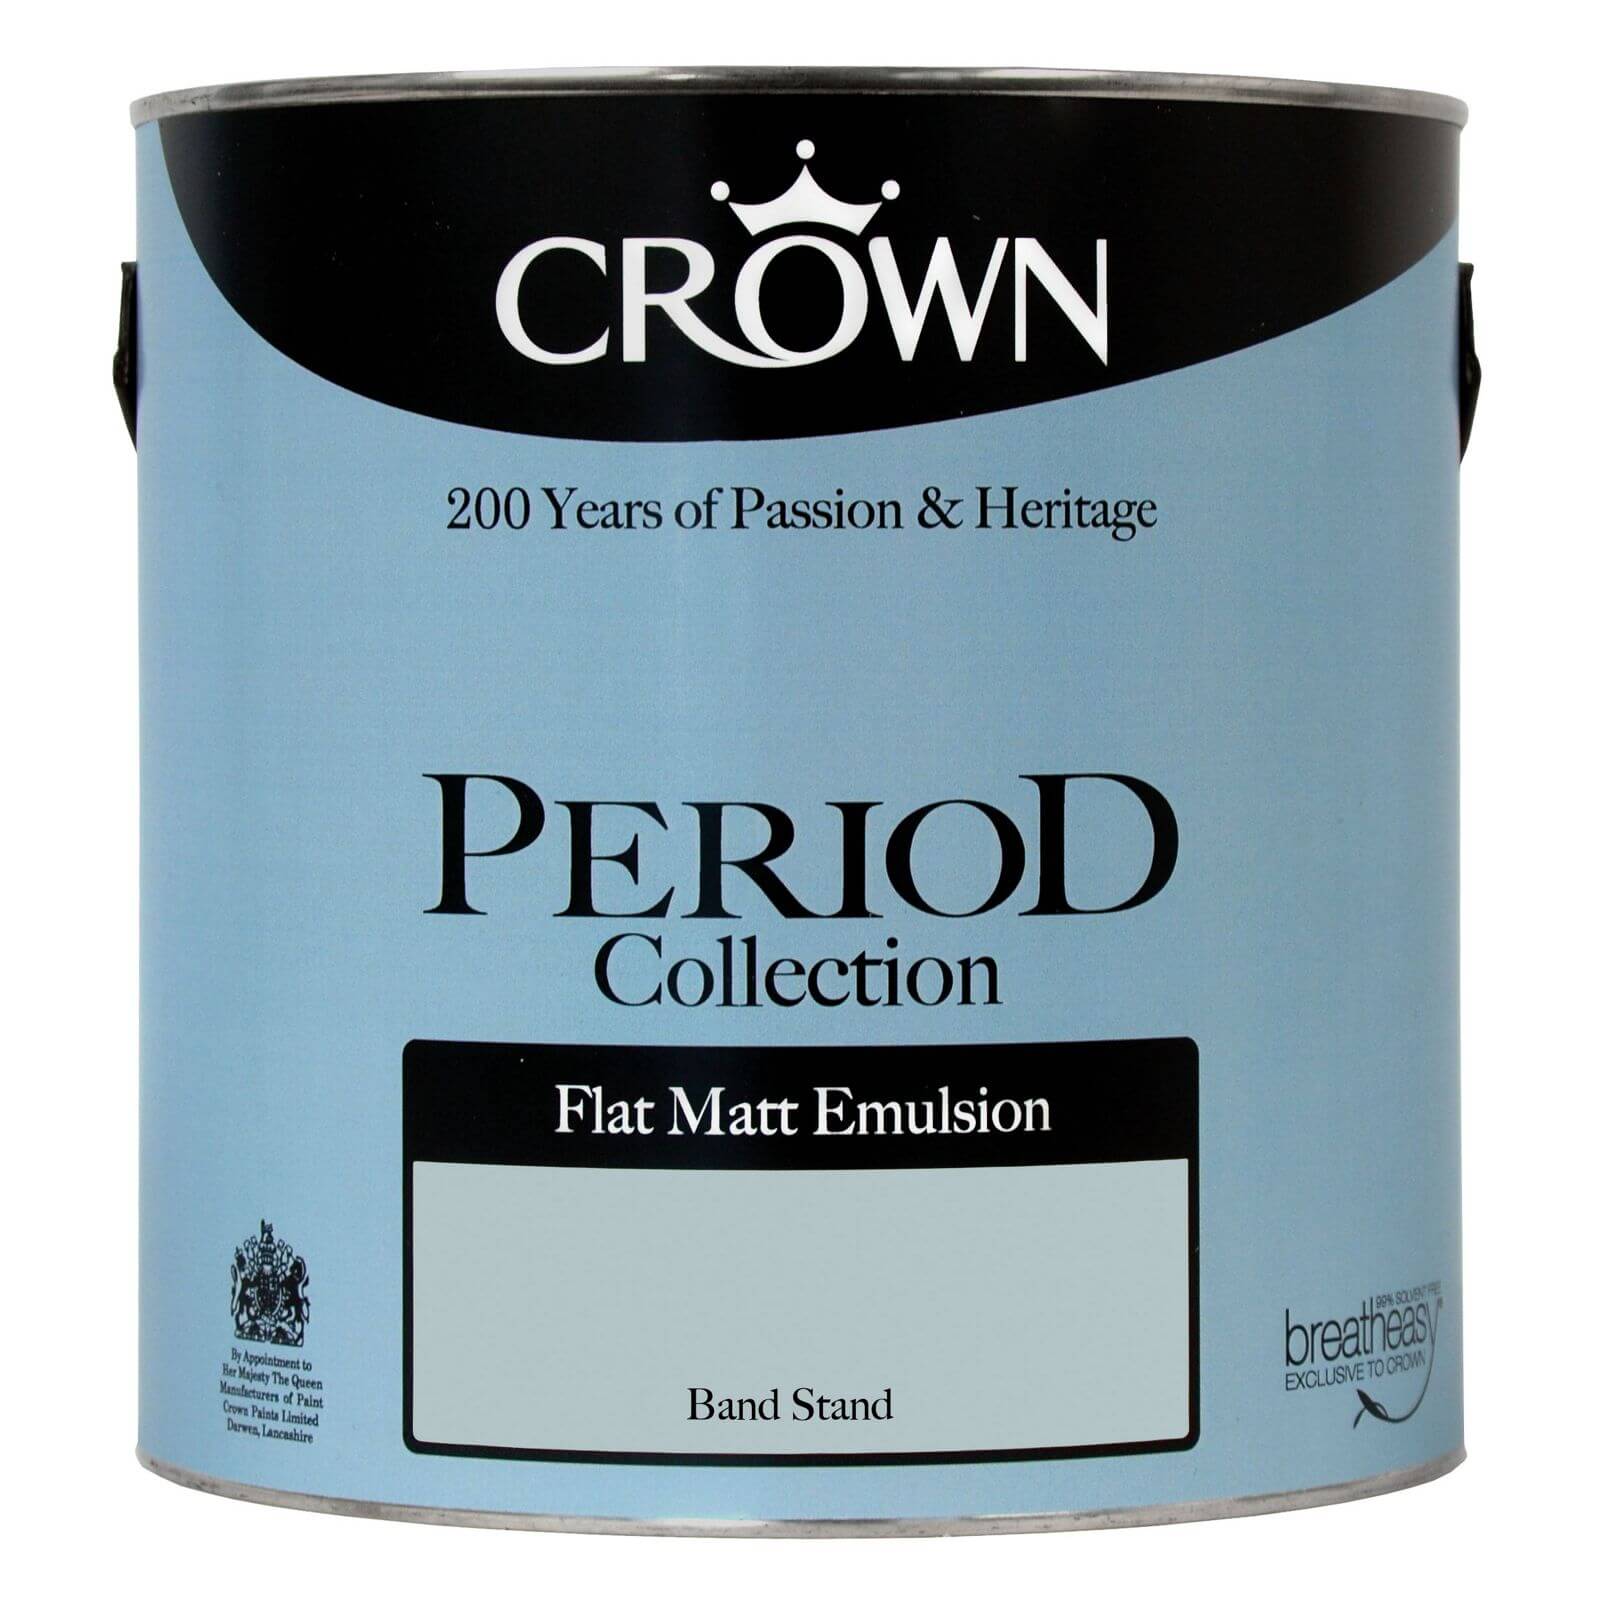 Crown Period Collection Bandstand - Flat Matt Emulsion Paint - 2.5L